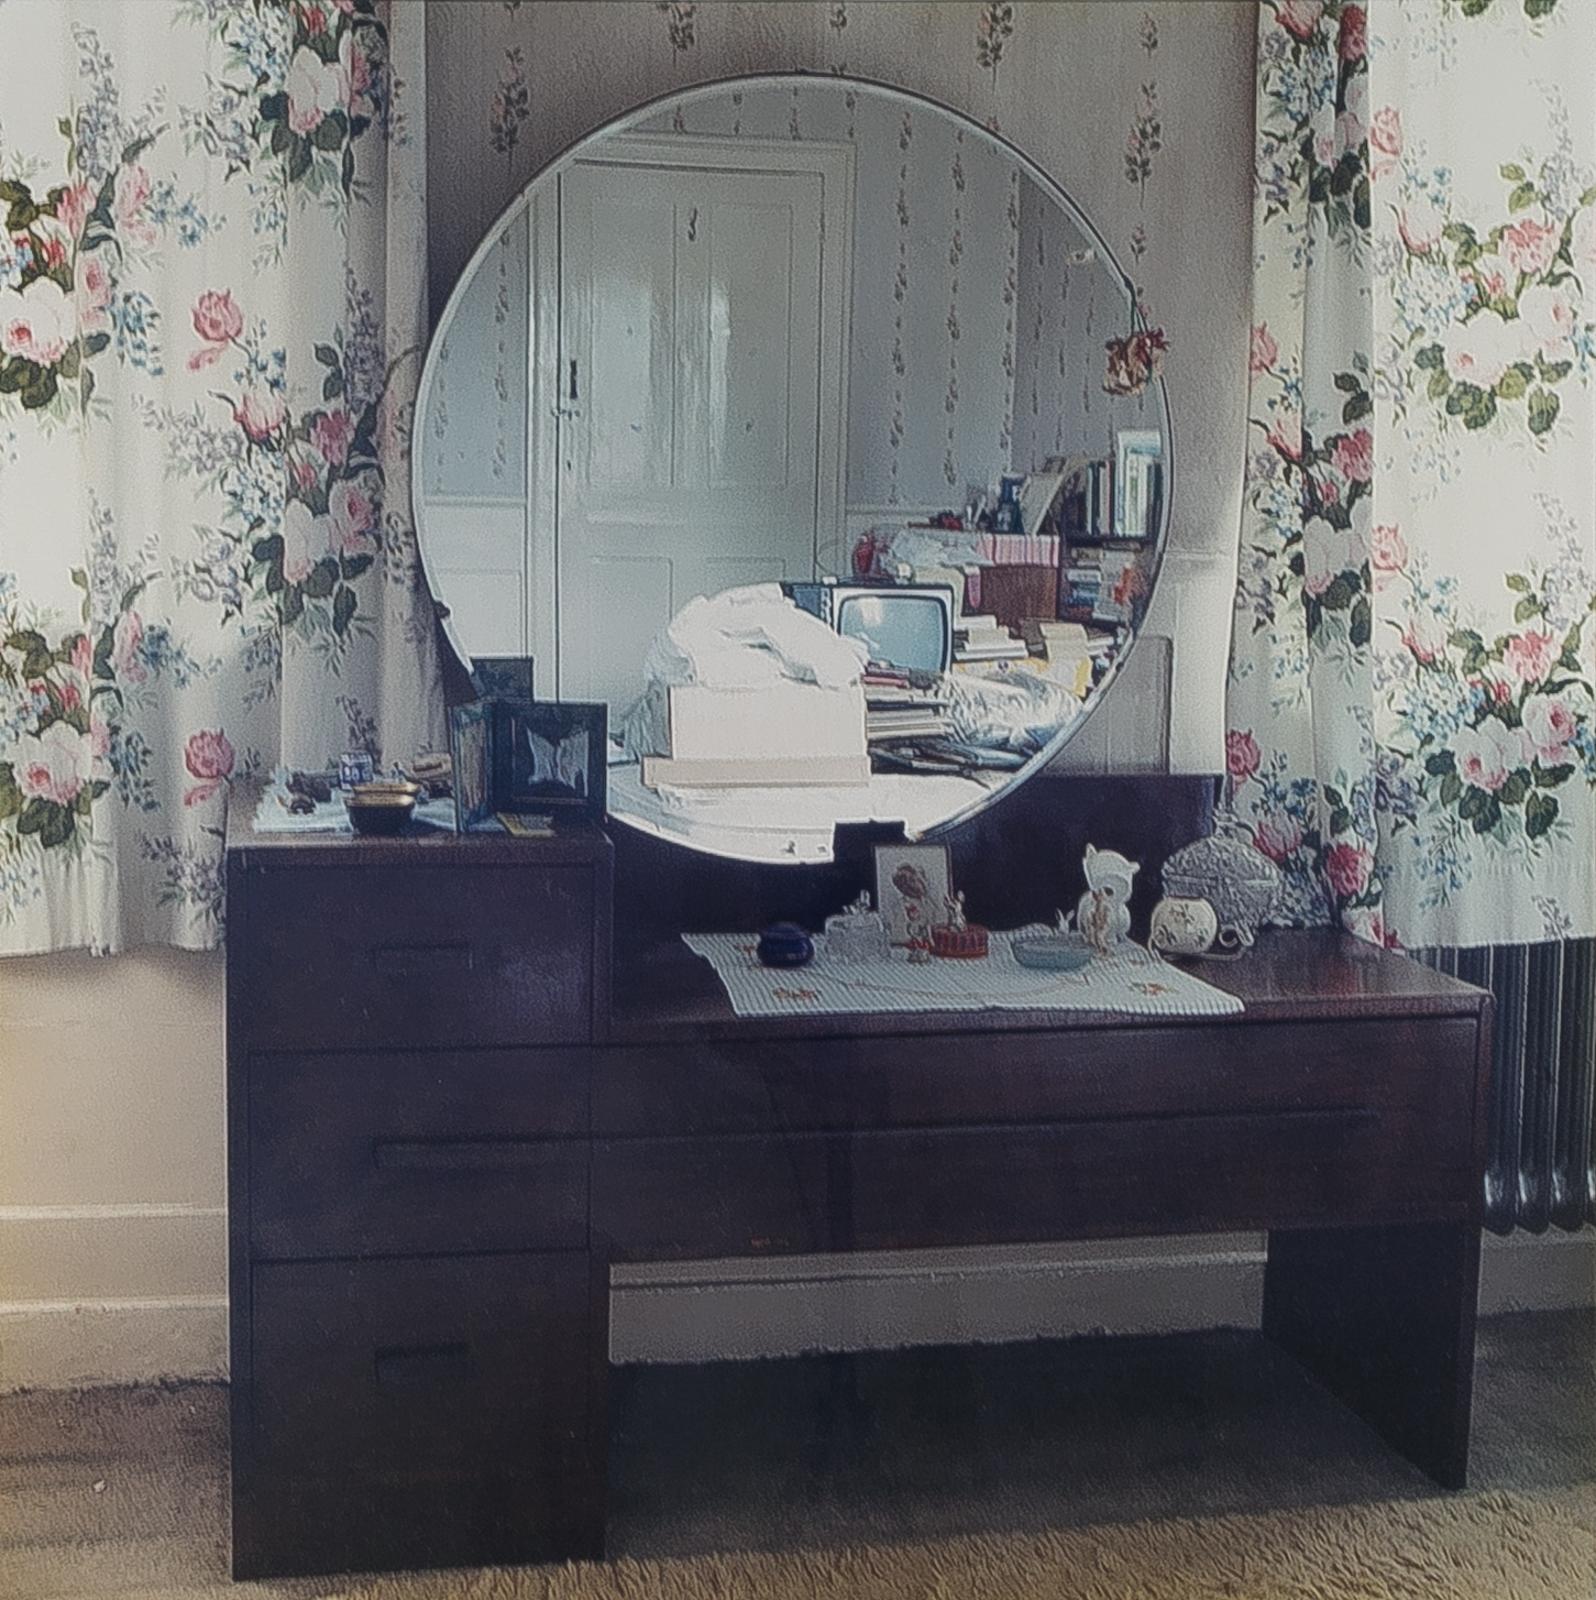 Karin Bubaš (1976) - Ivy House, Vanity